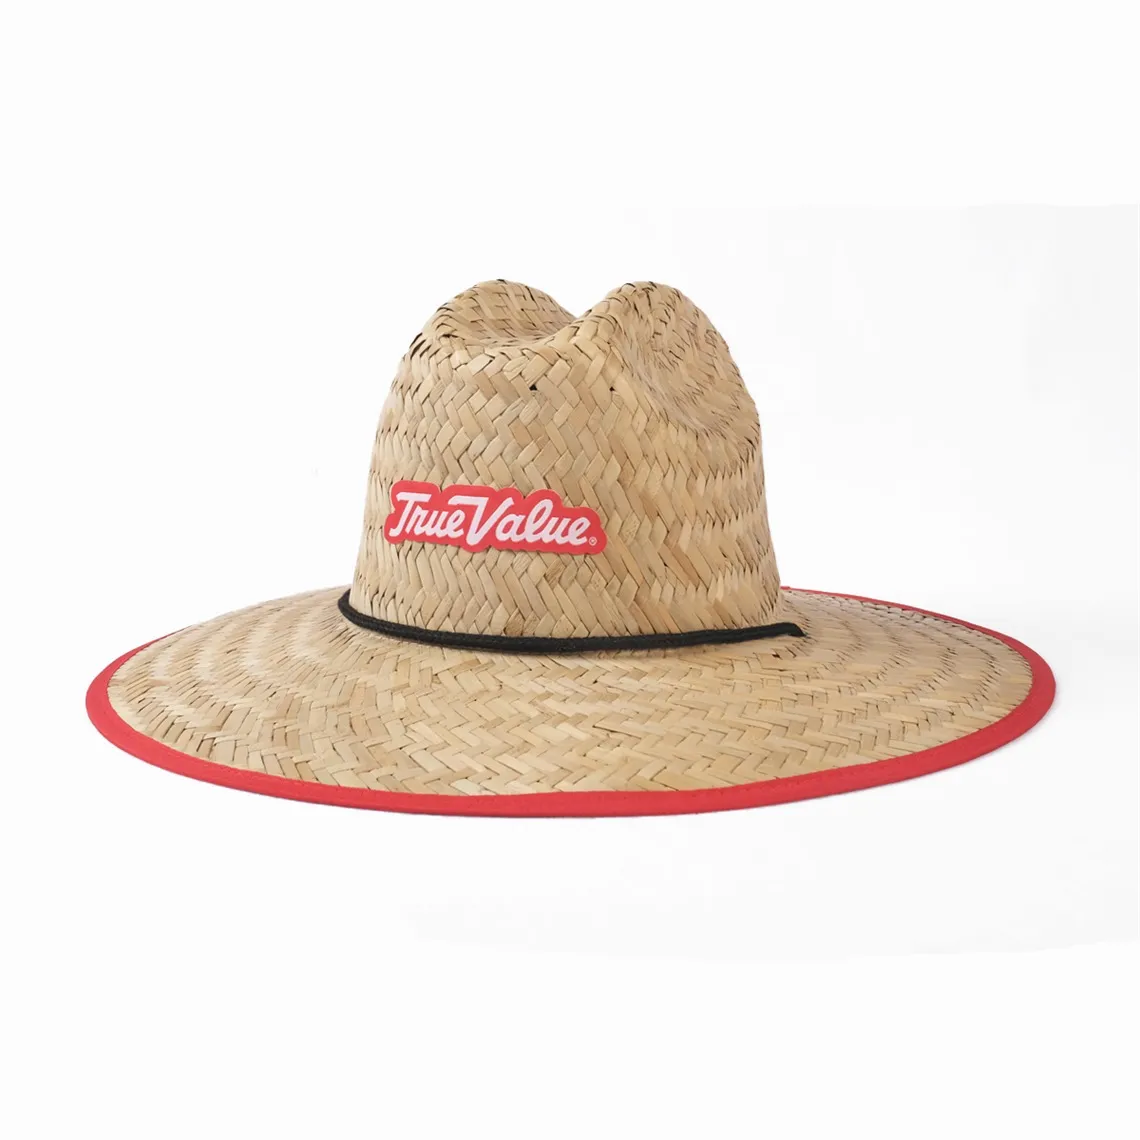 bulrush grass lifeguard straw hat